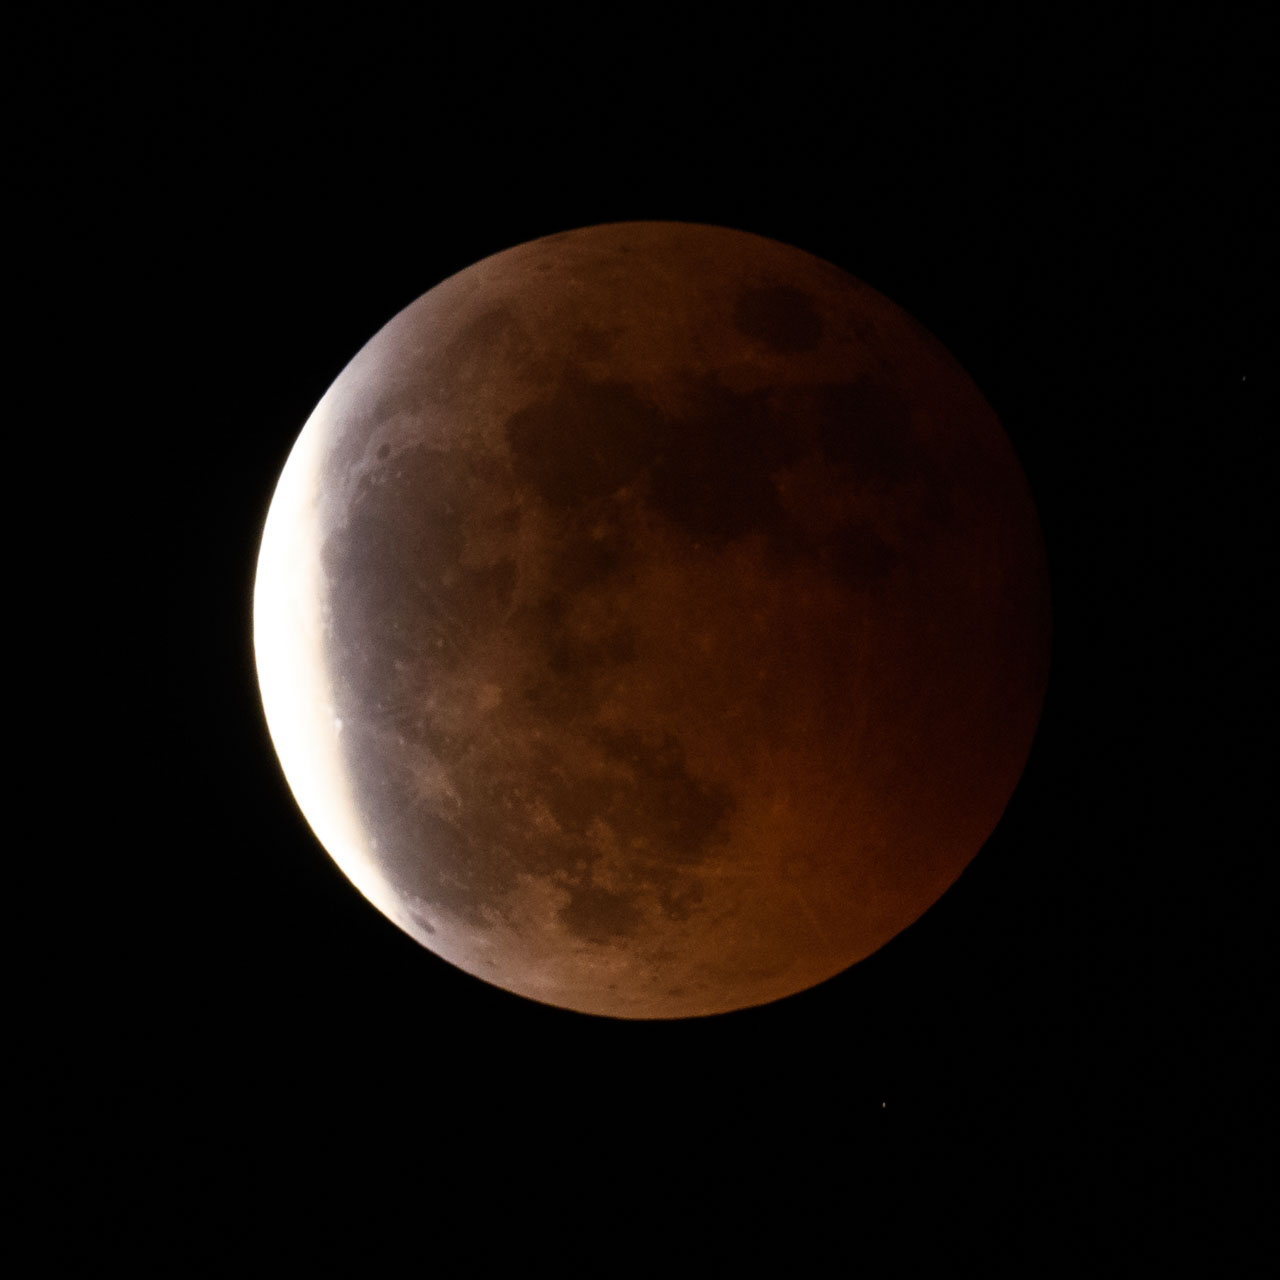 End of total lunar eclipse